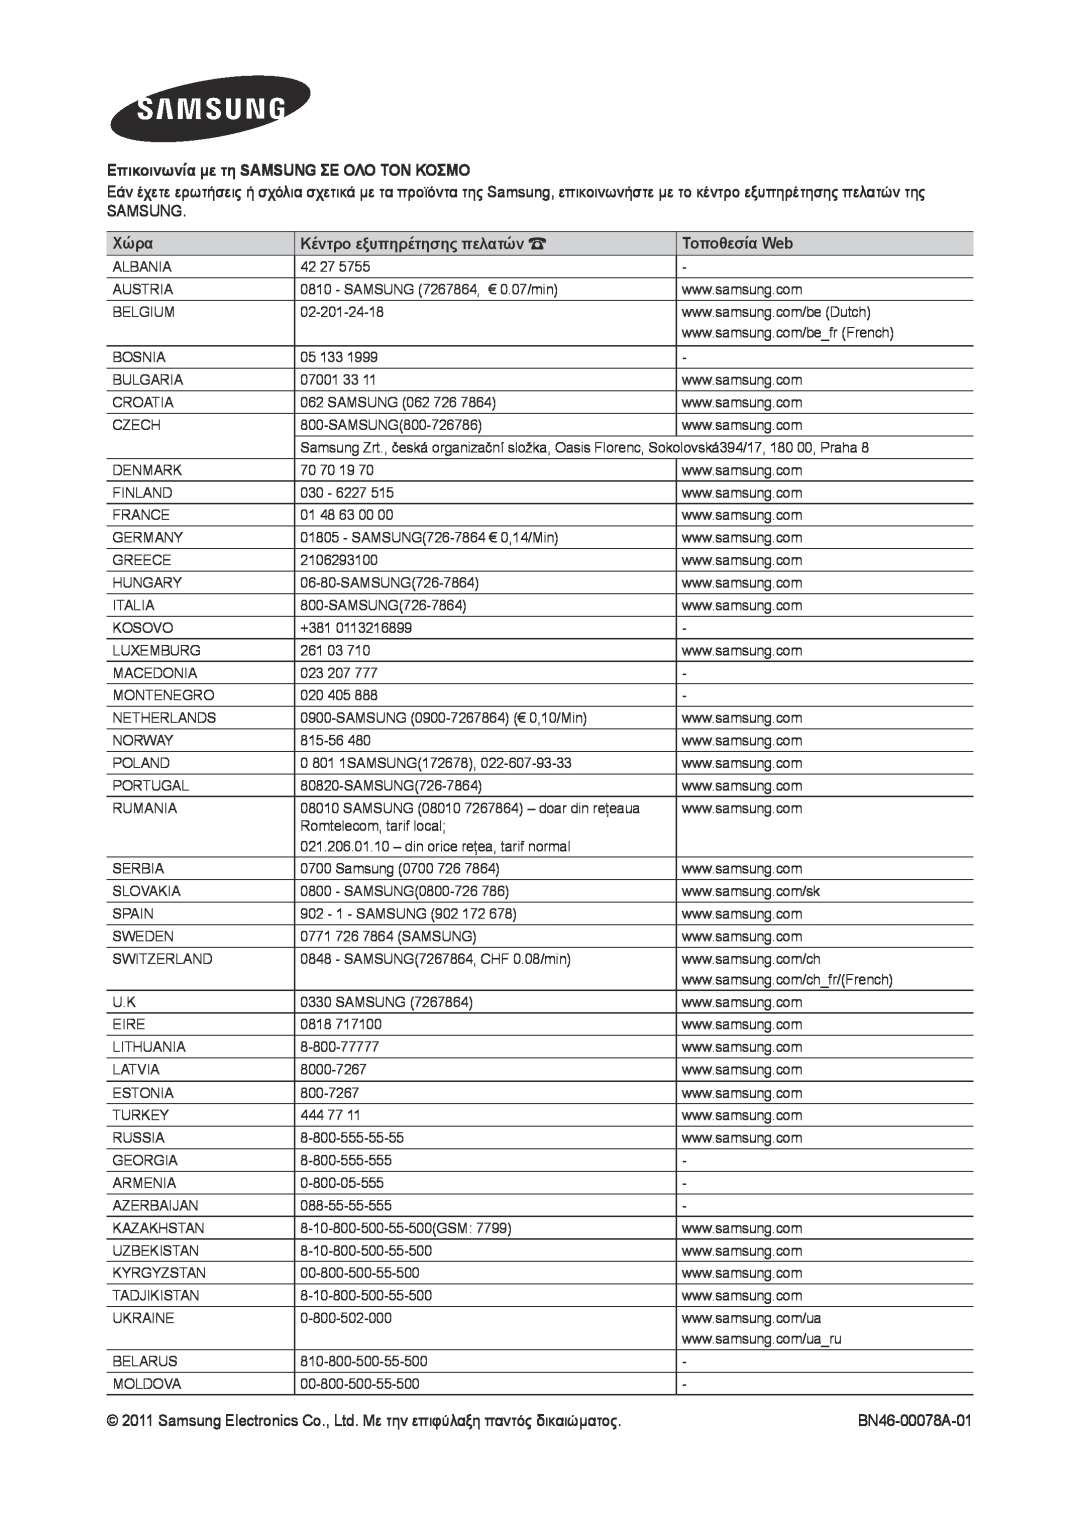 Samsung LT23A750EX/EN manual Επικοινωνία με τη SAMSUNG ΣΕ ΟΛΟ ΤΟΝ ΚΟΣΜΟ, Samsung, Χώρα, Κέντρο εξυπηρέτησης πελατών 